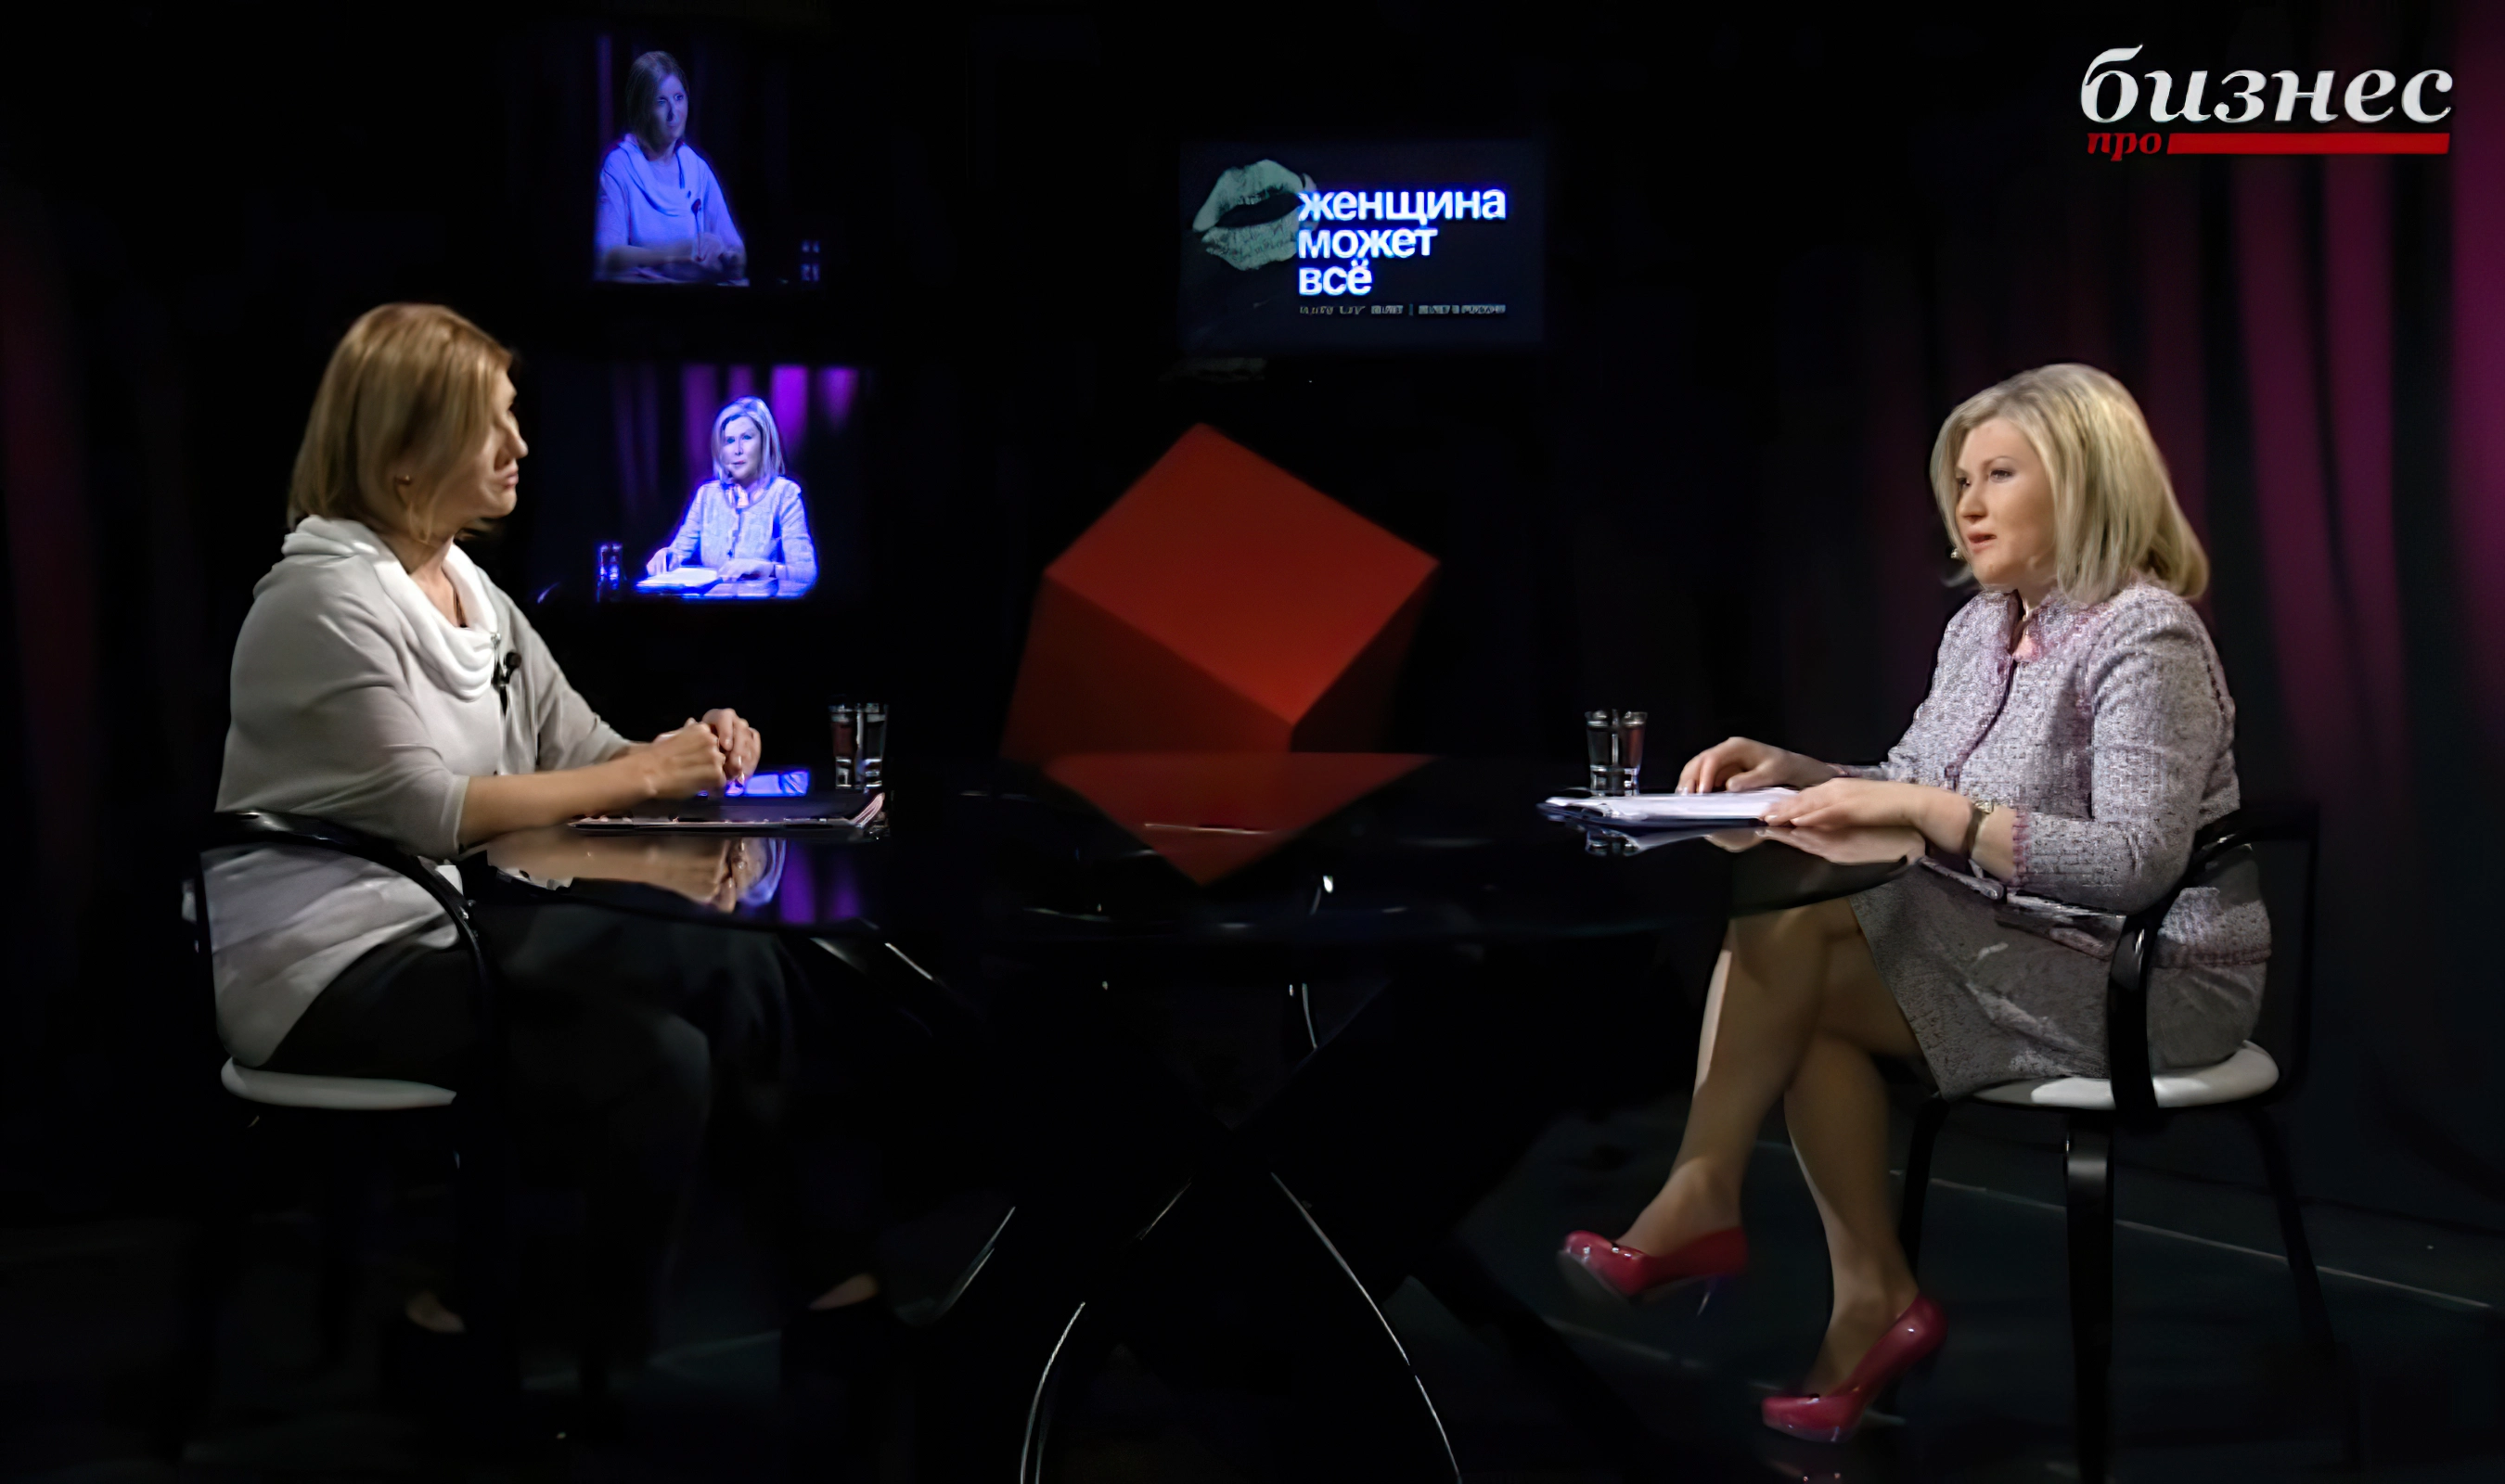 Галина Киселёва в программе «Женщина может всё» на телеканале Про Бизнес